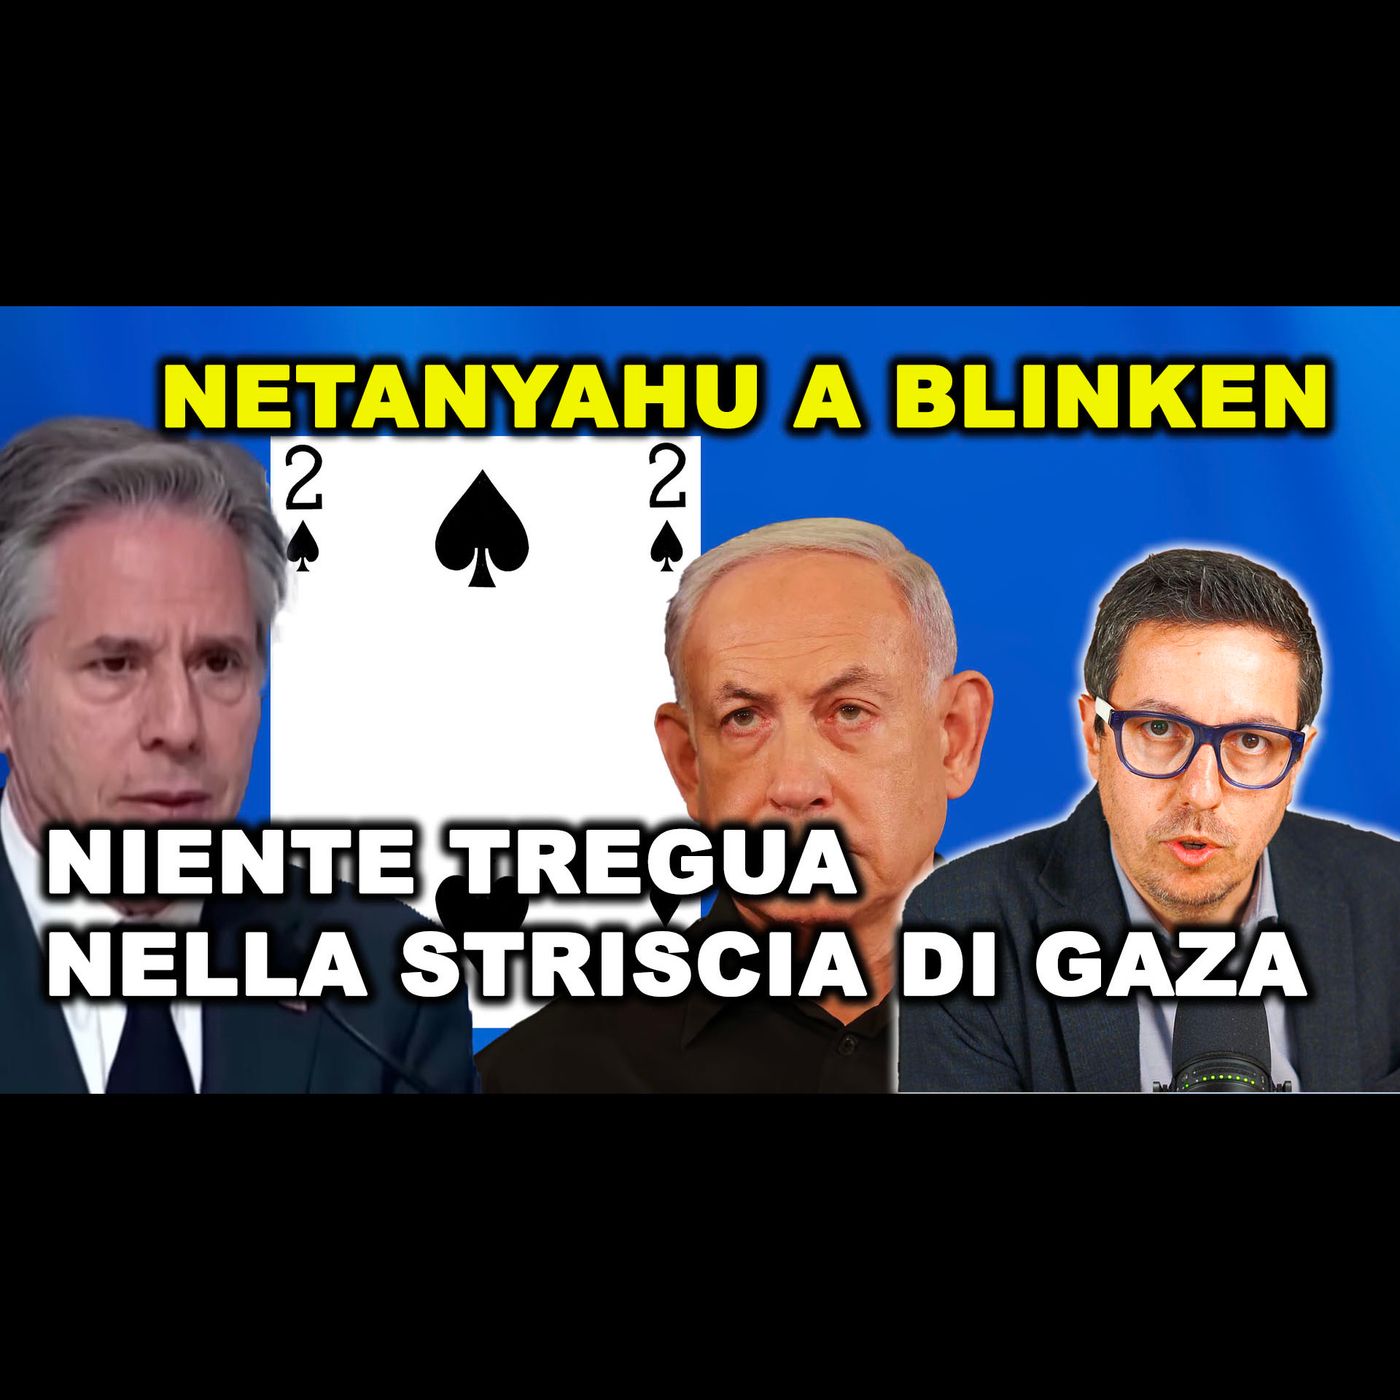 NIENTE TREGUA | NETANYAHU dice NO a BLINKEN | Israele attaccherà Rafah